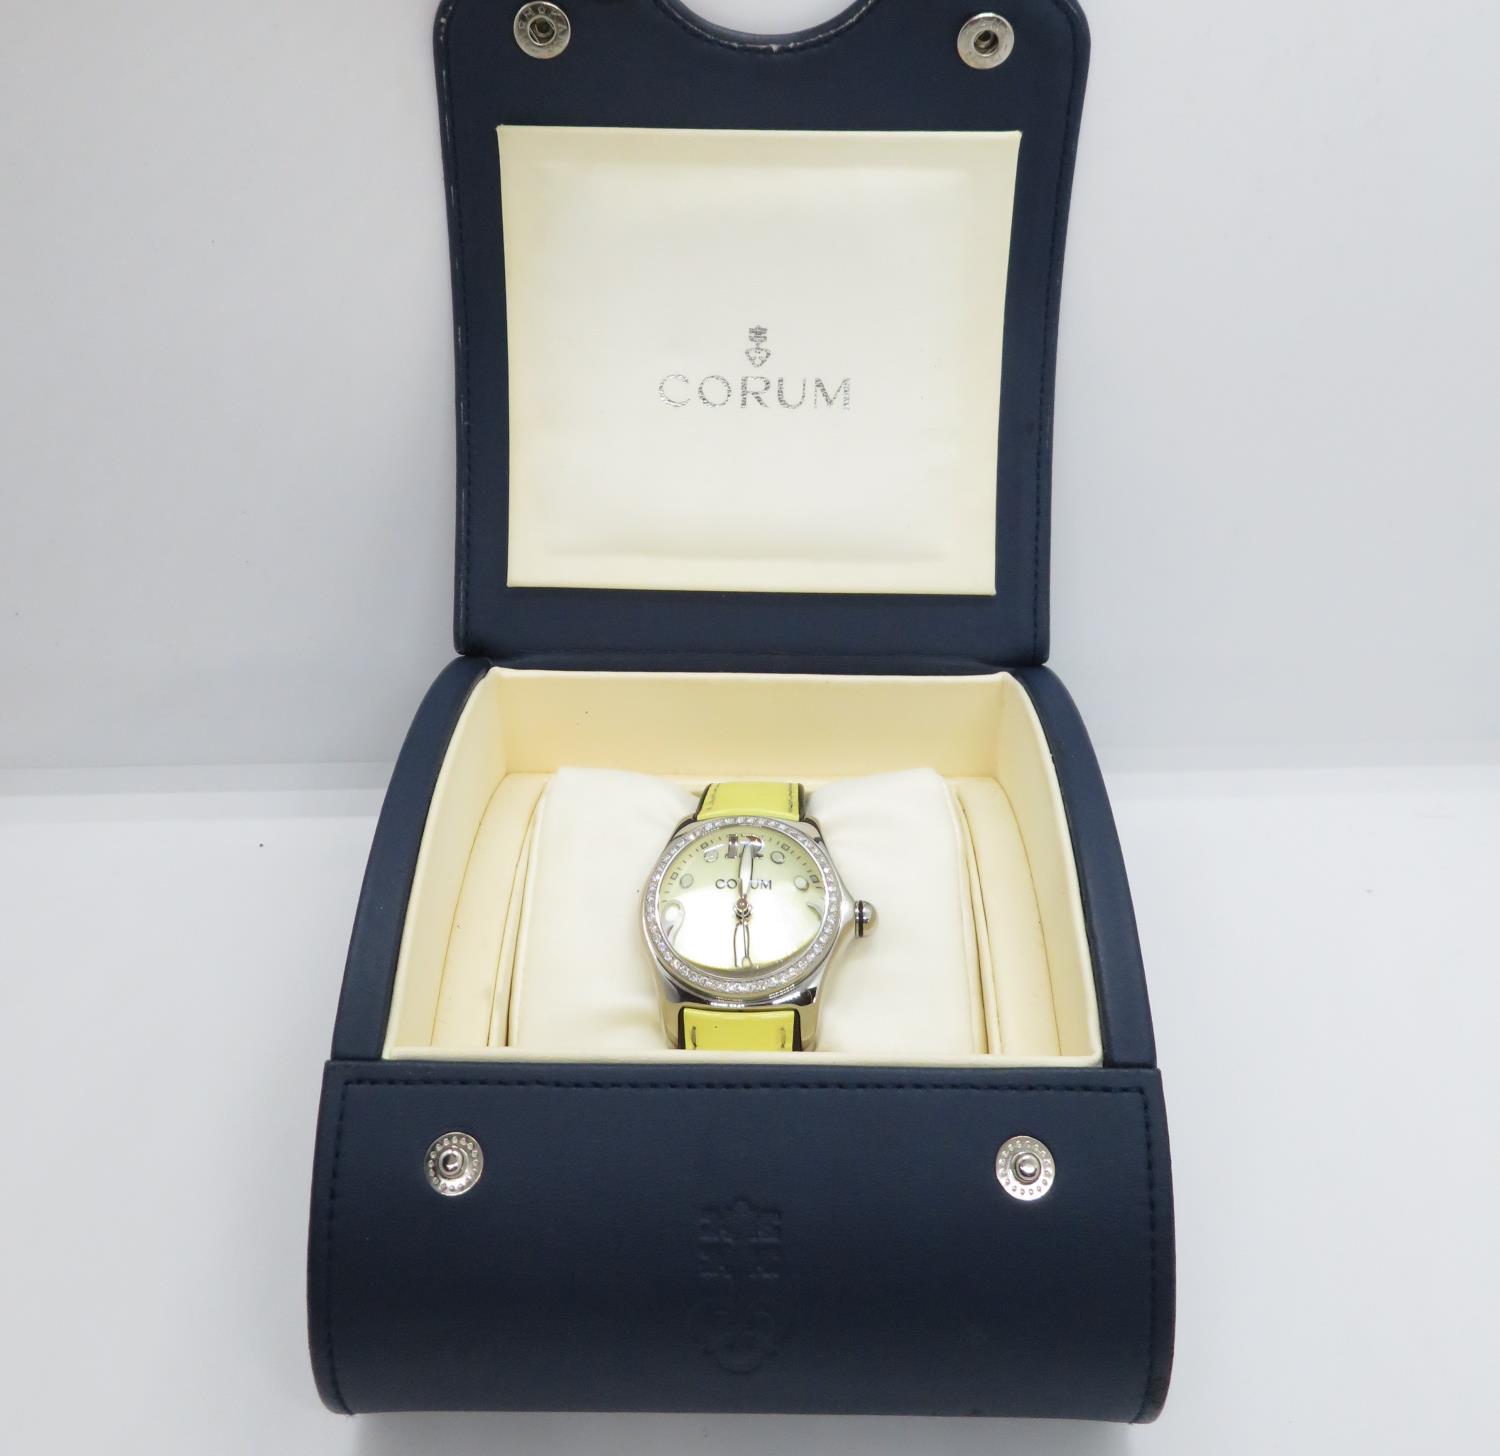 Corum Bubble watch diamond bezel and original box in near mint condition - Image 9 of 10